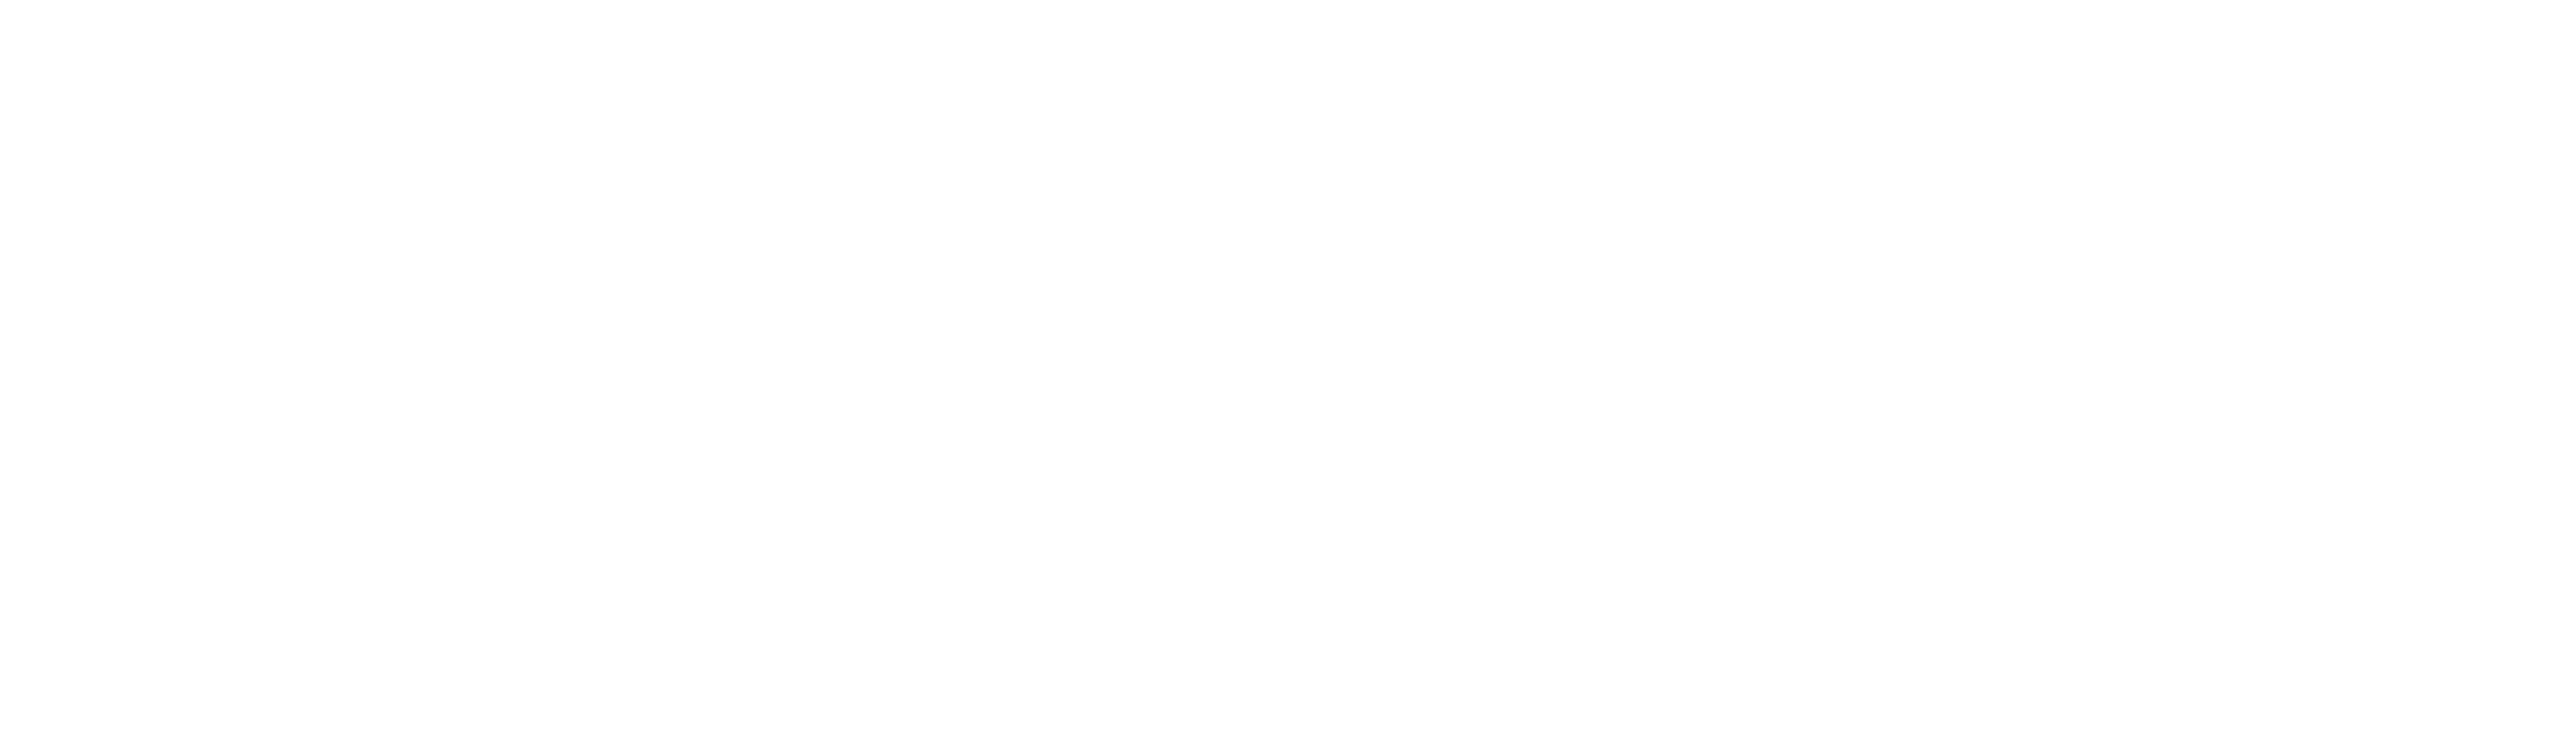 NeighborPlate